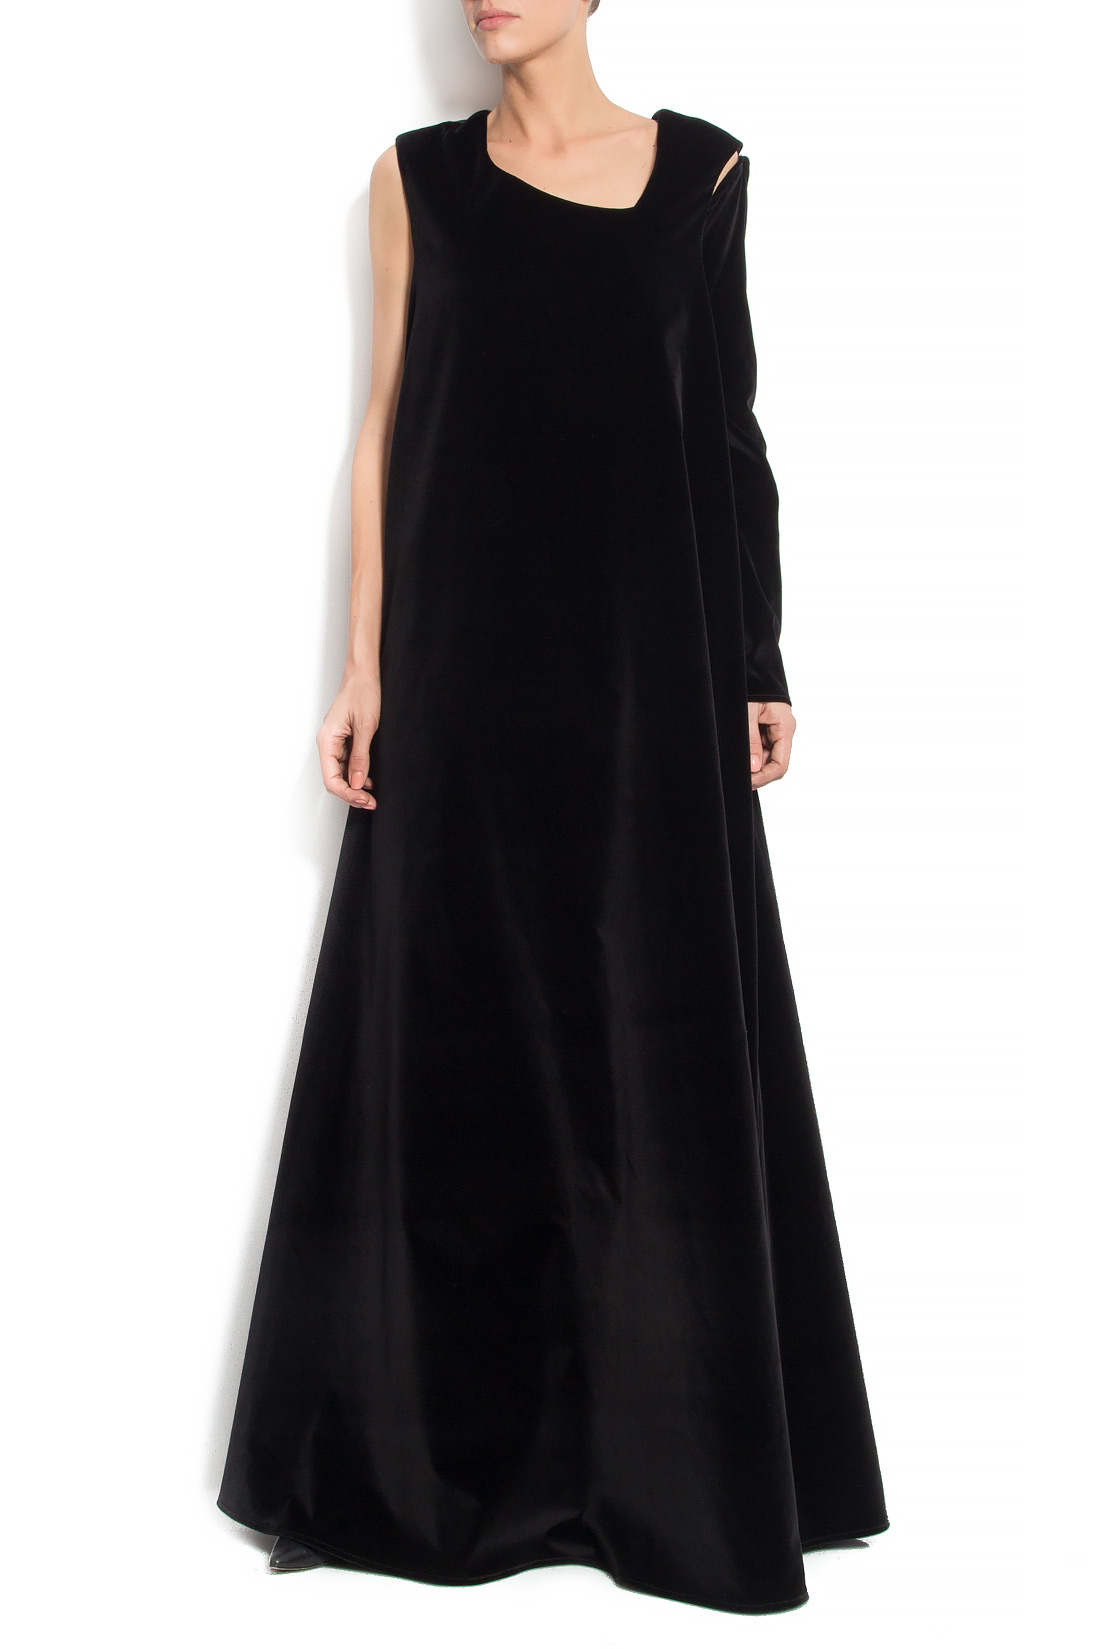 Velvet dress with removable sleeve Aer Wear image 0